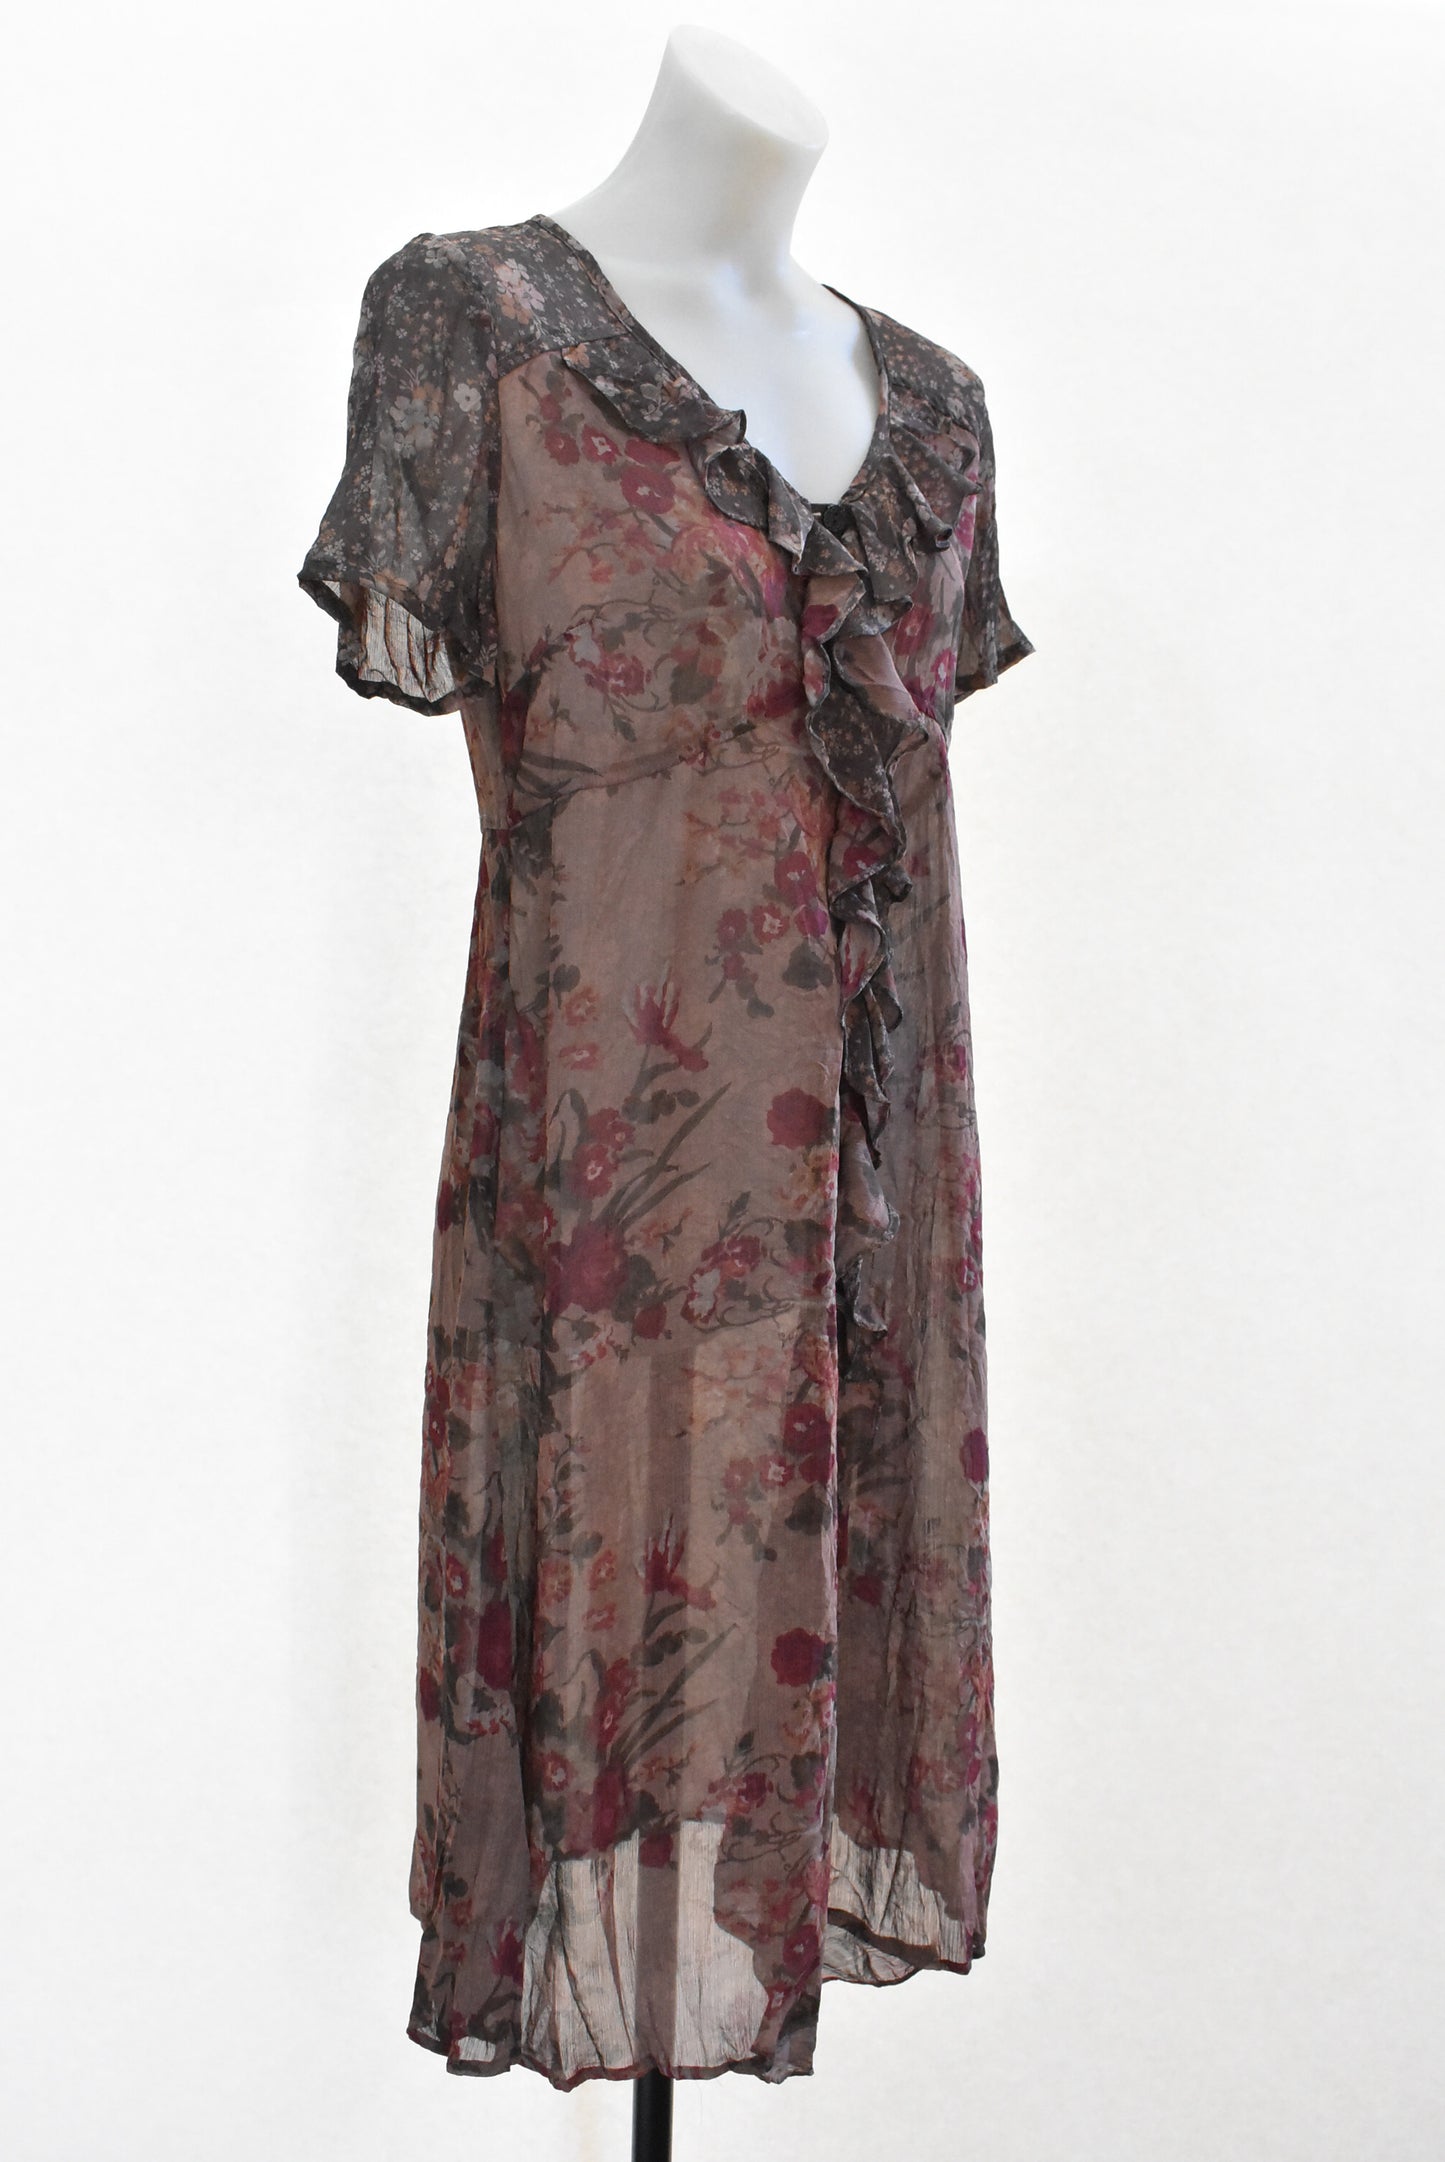 Leslie Herbert, made in NZ, sheer dress, 8